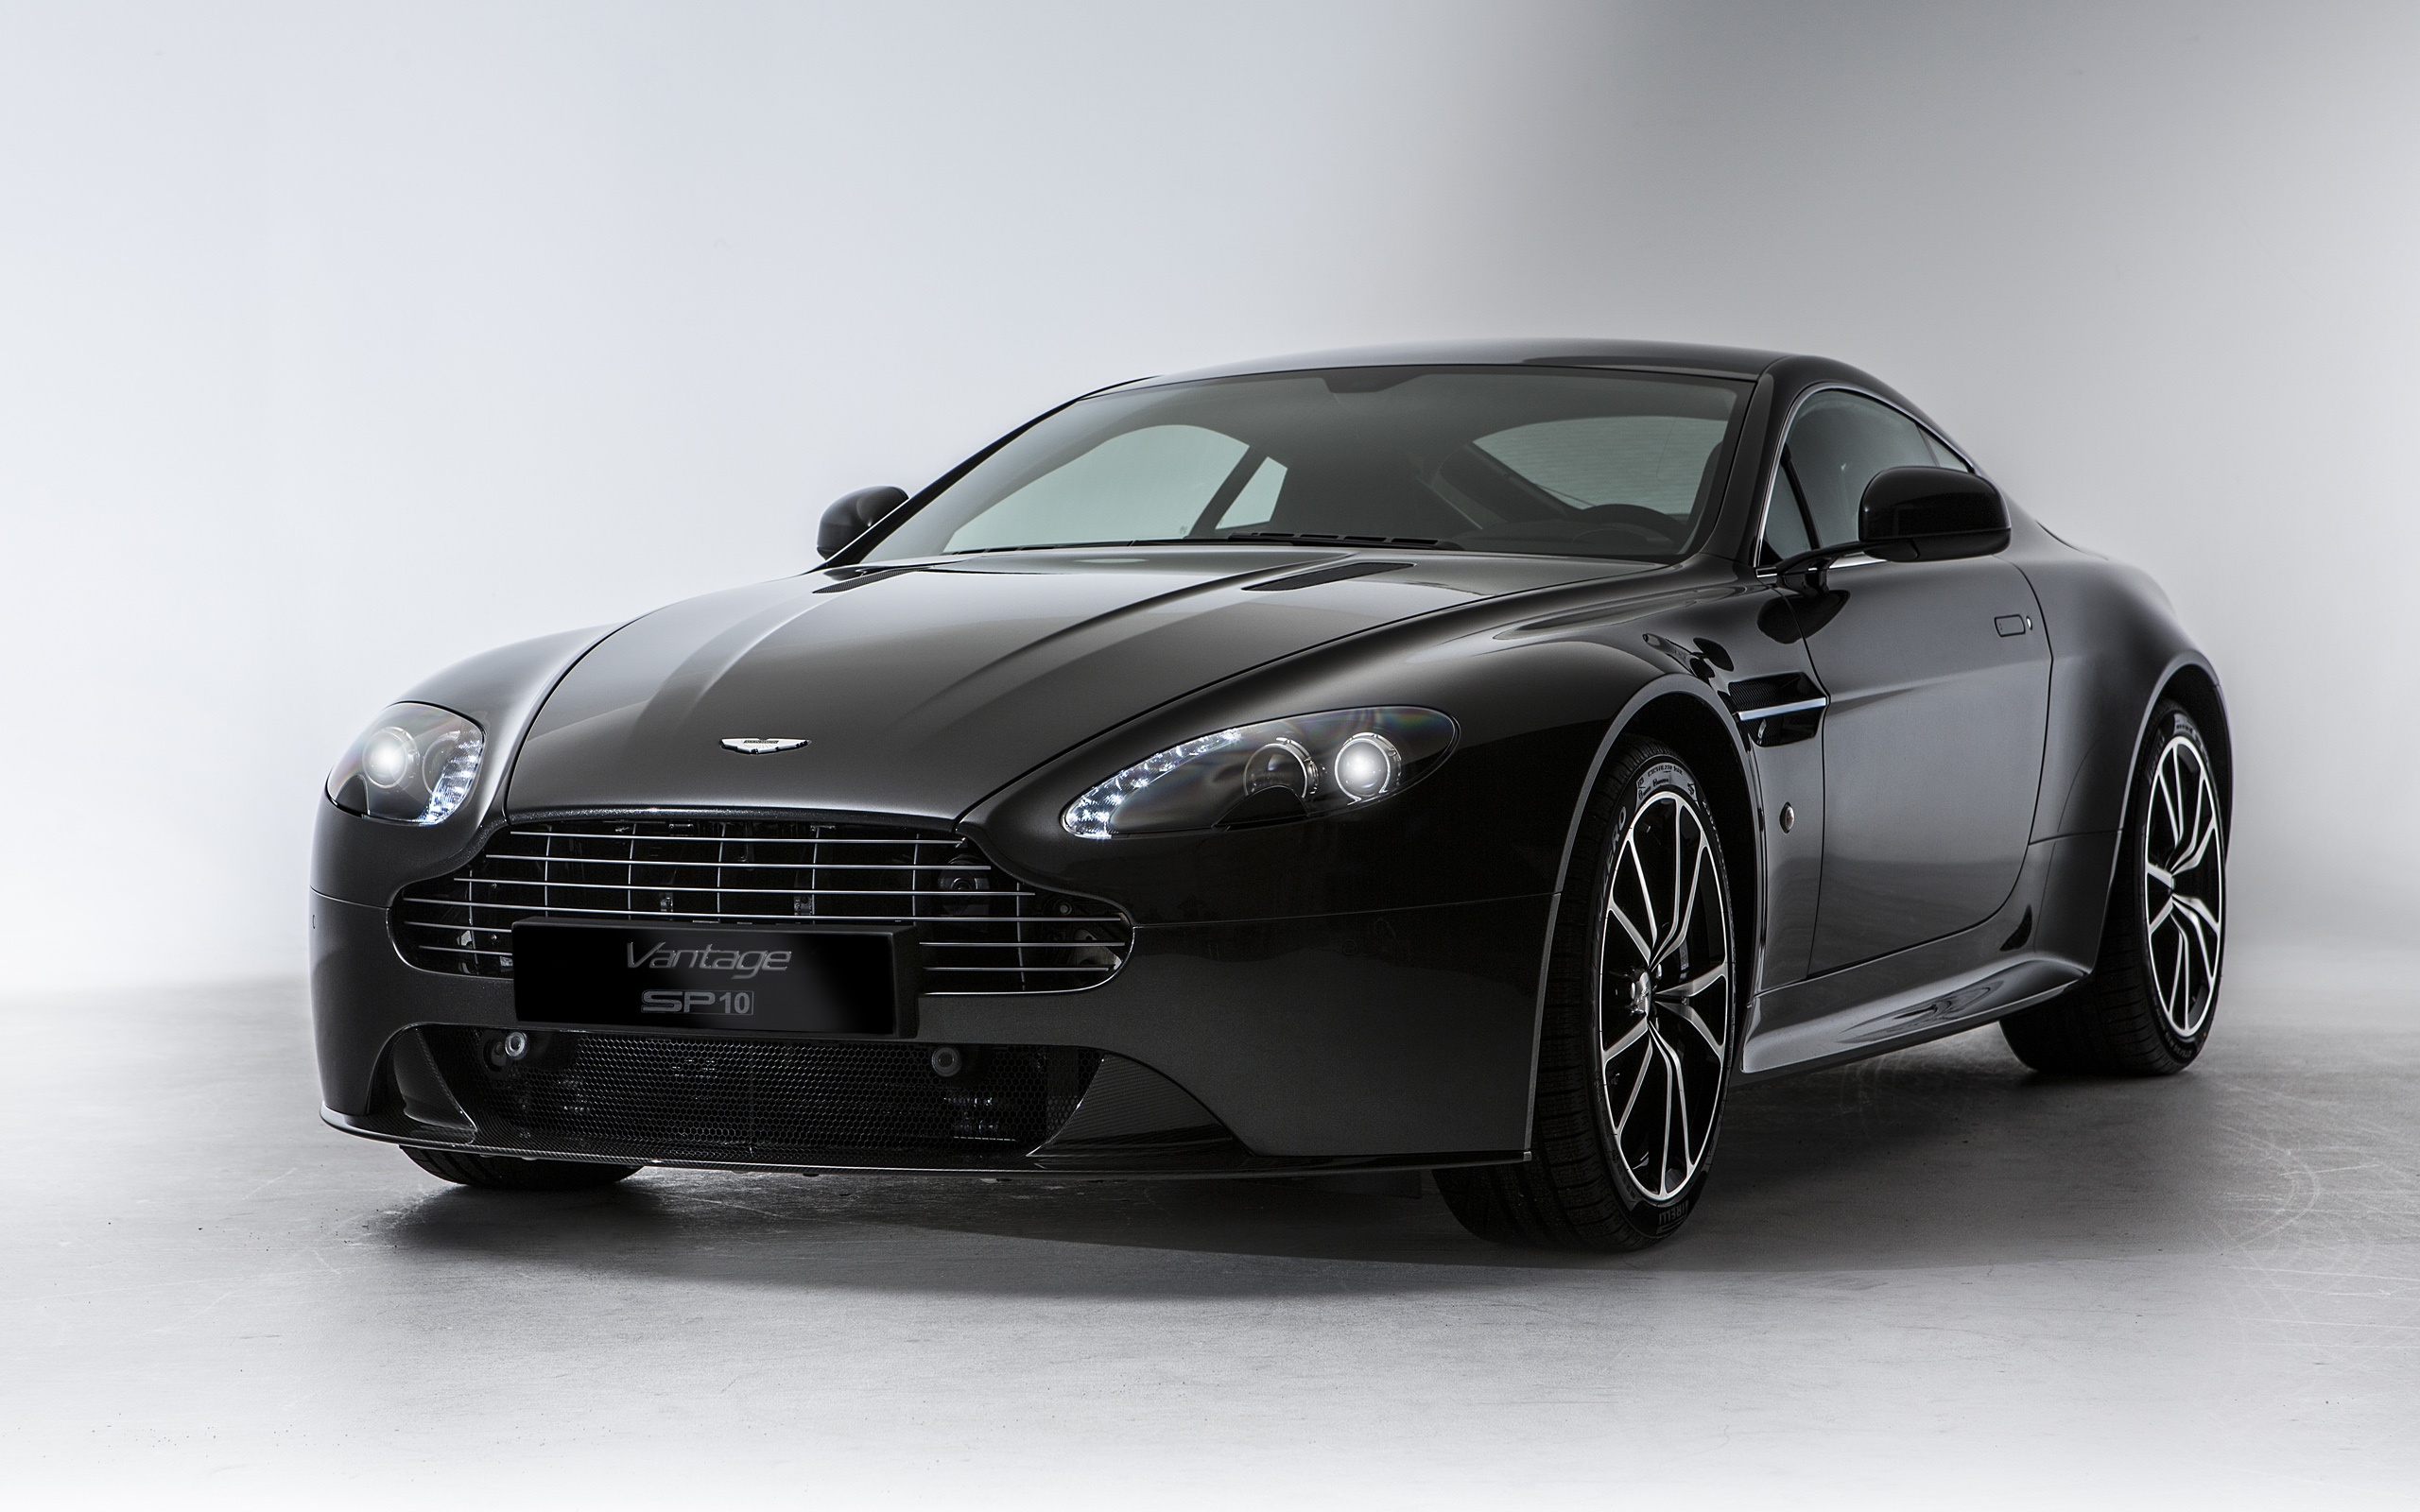 Aston Martin V8 Vantage S Sp10 Black Wallpaper Cars Wallpaper Better